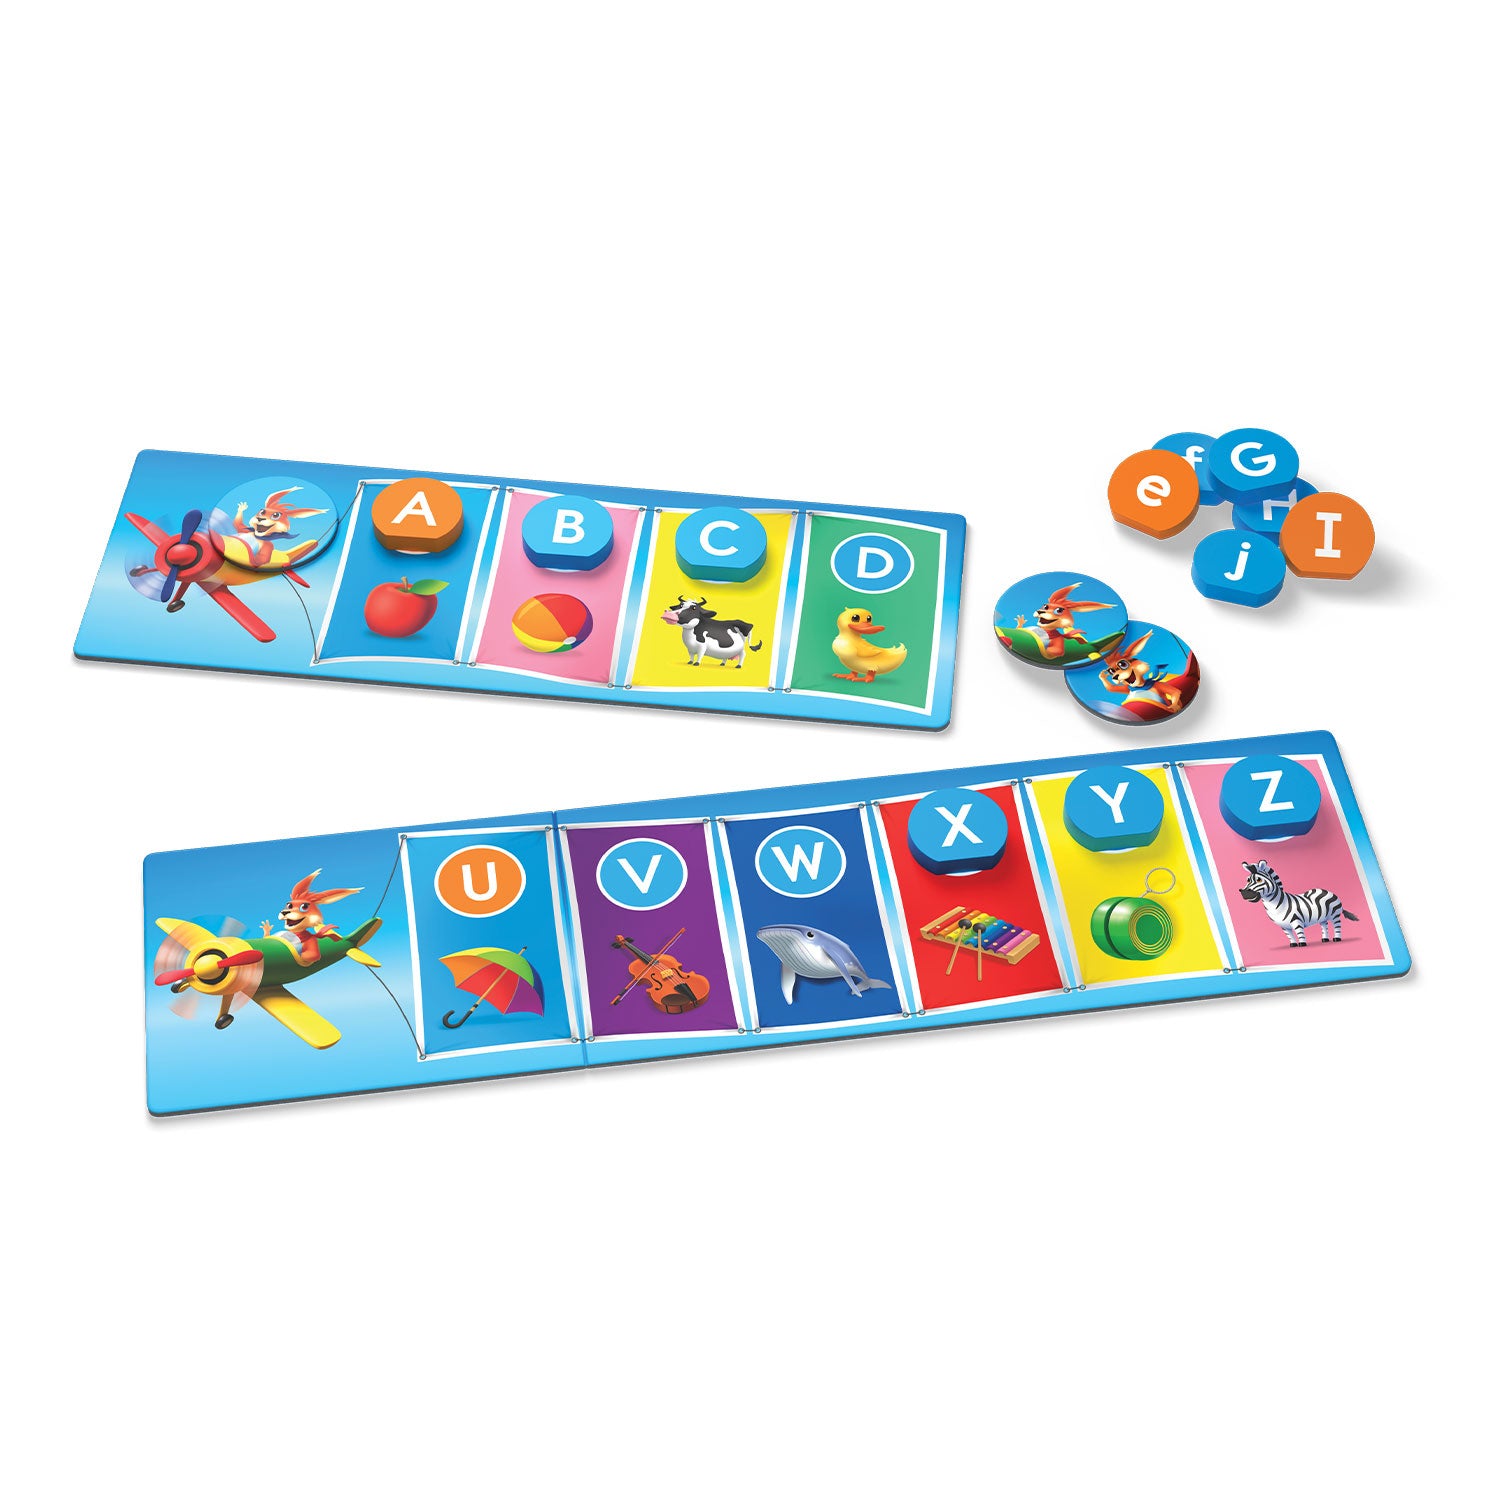 Fun Alphabet Game - Best Free Toddler Games